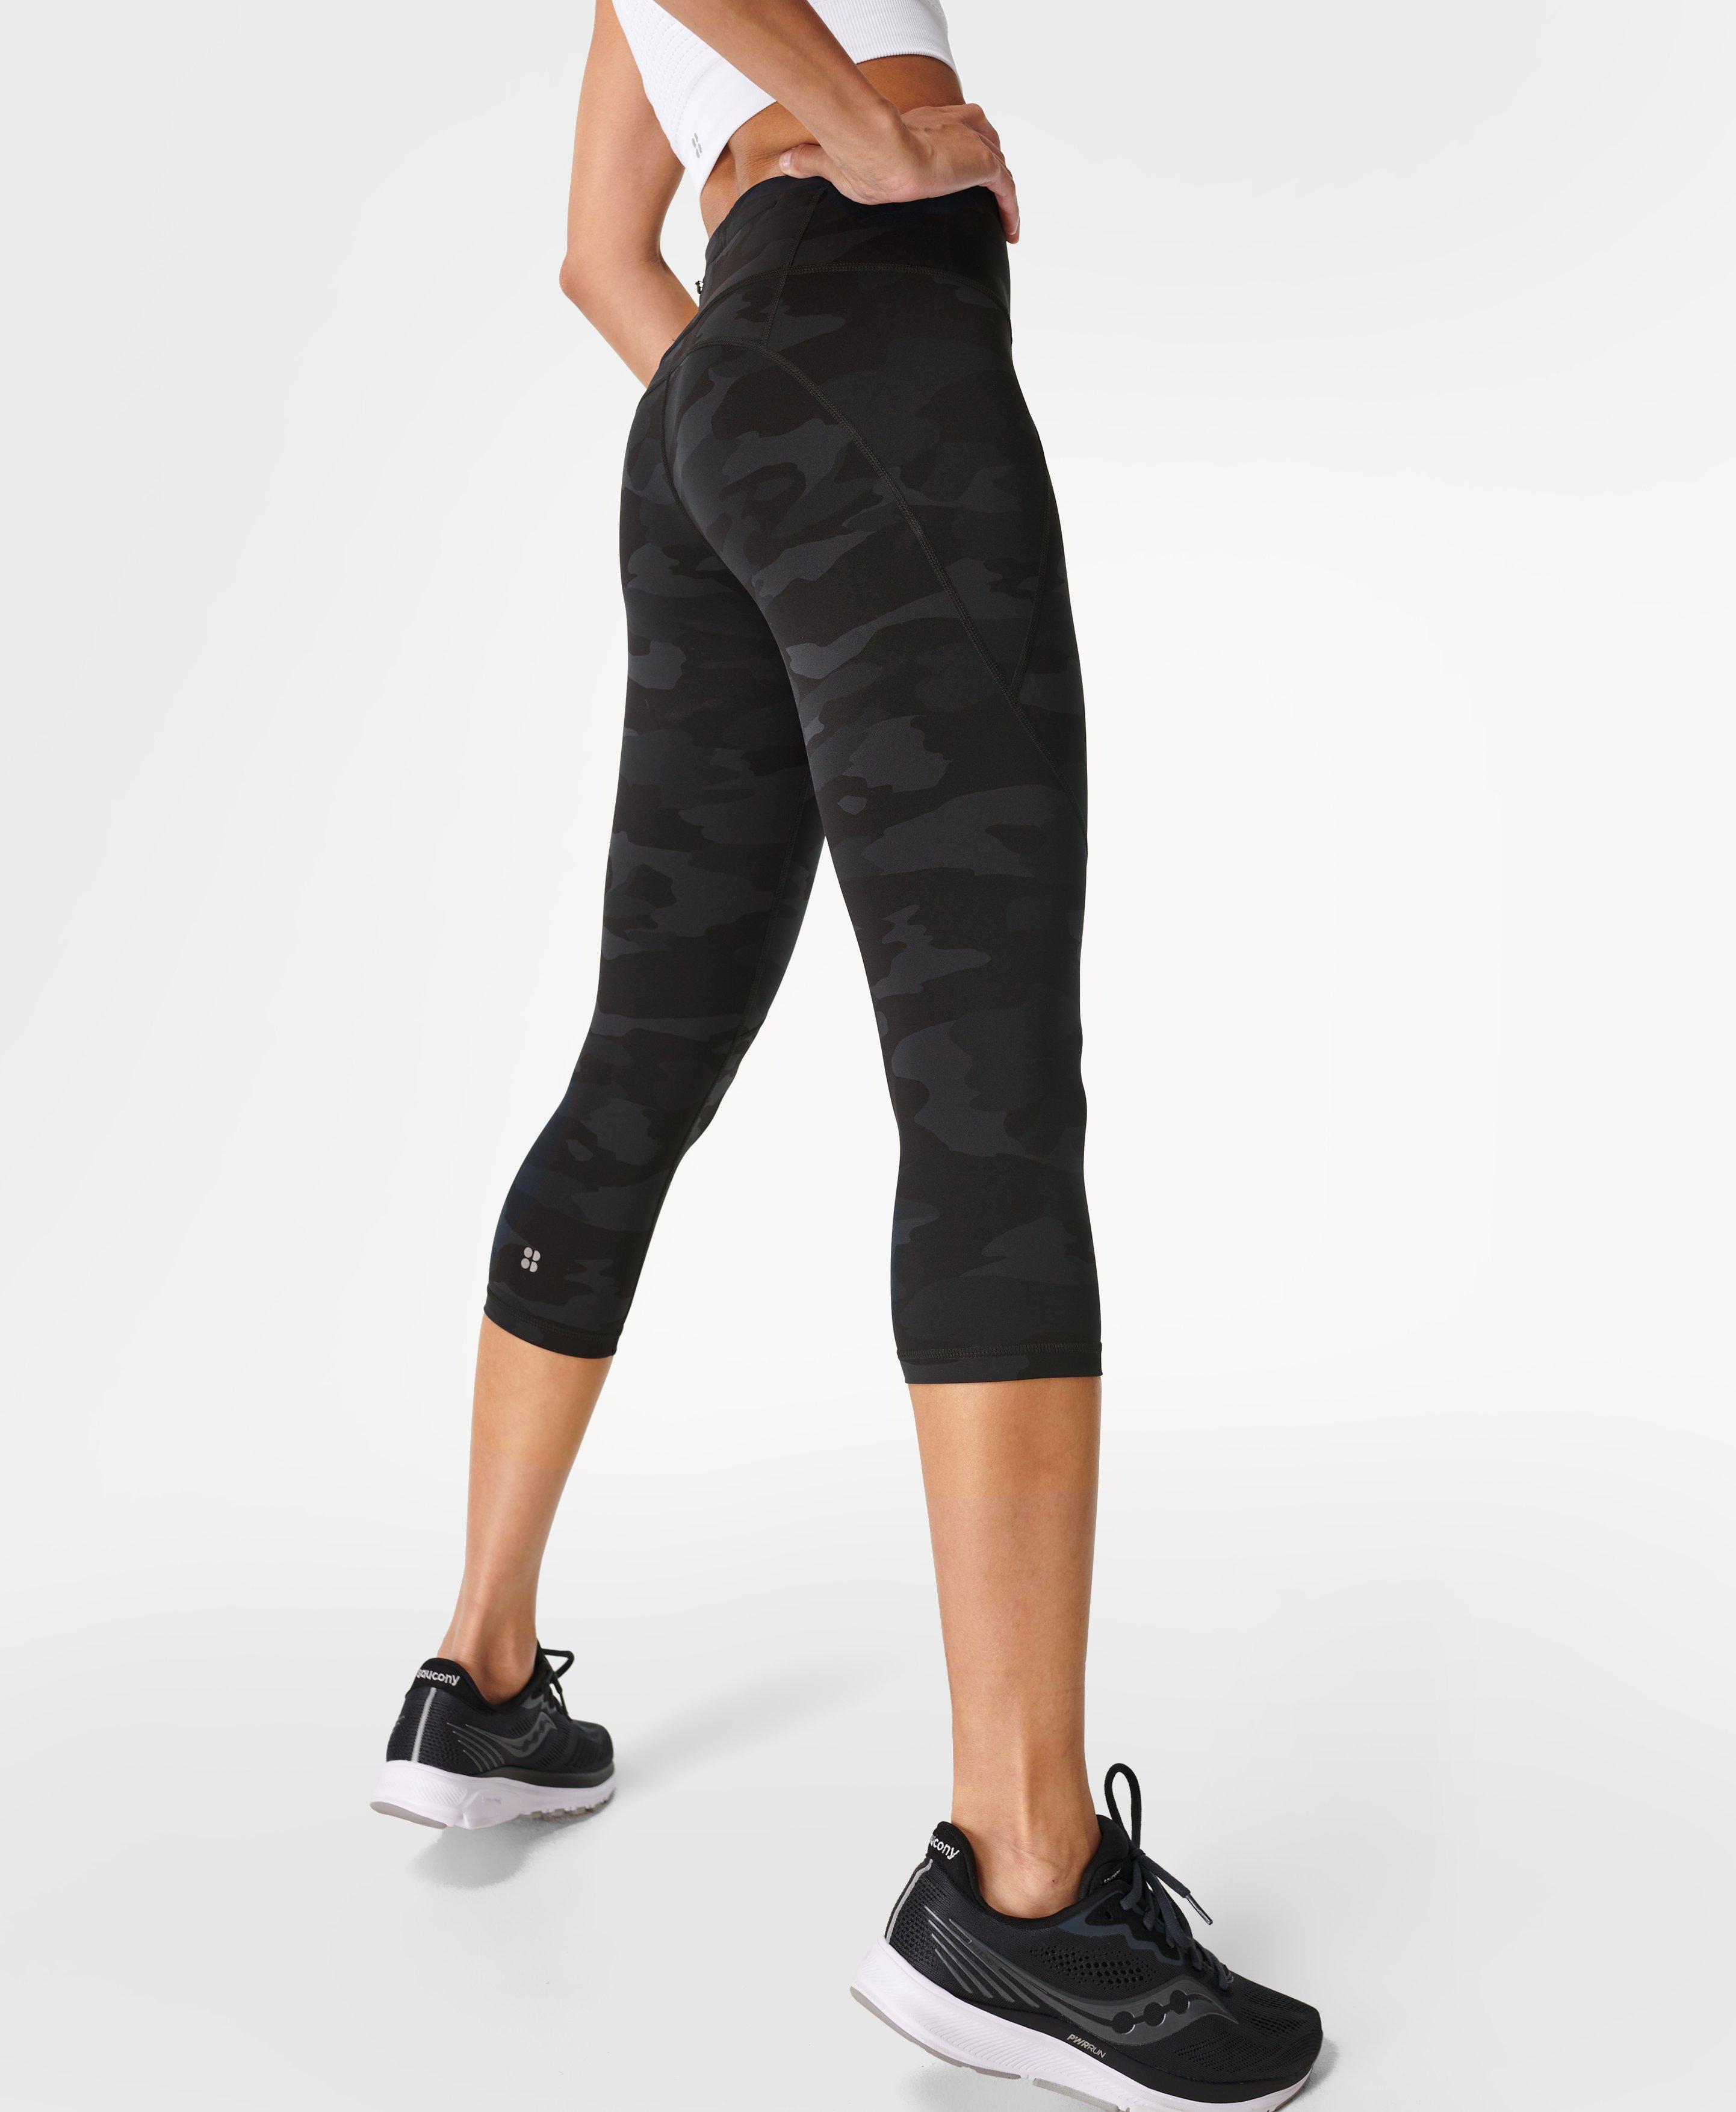 Sweaty Betty Women's Black Power High-Waist Cropped Legging SB Slot Print  Size M